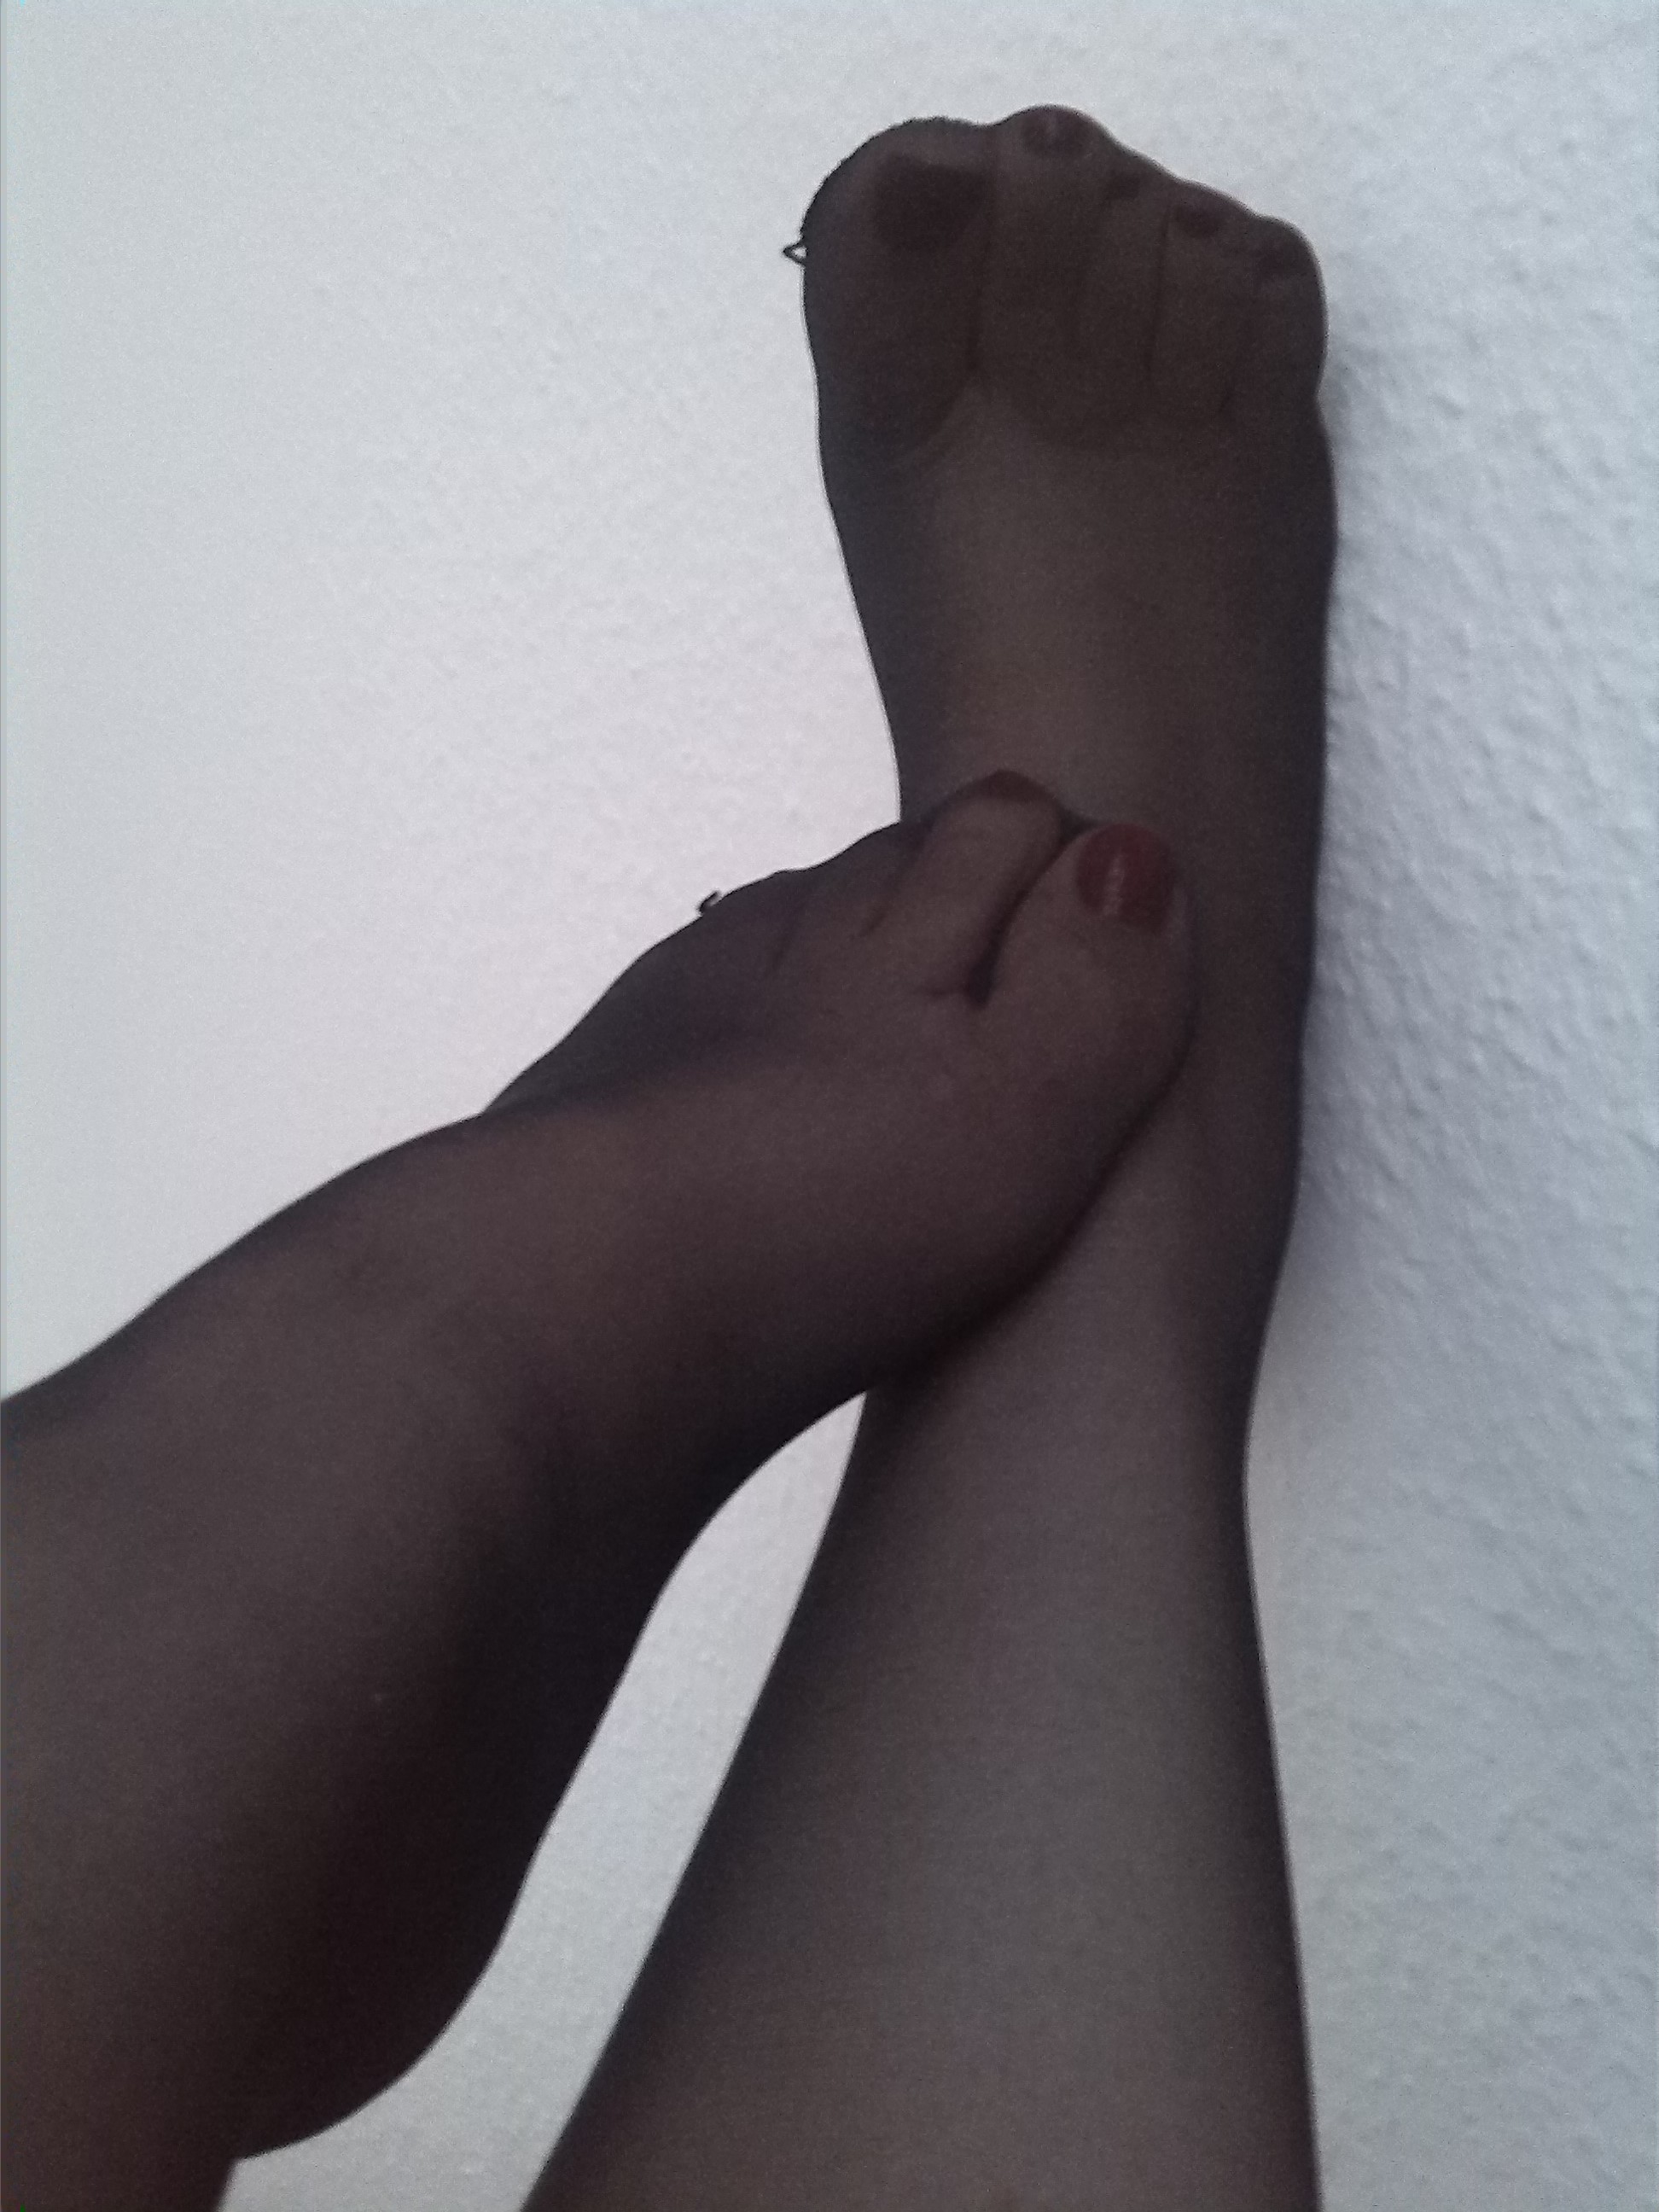 Feet in black nylon